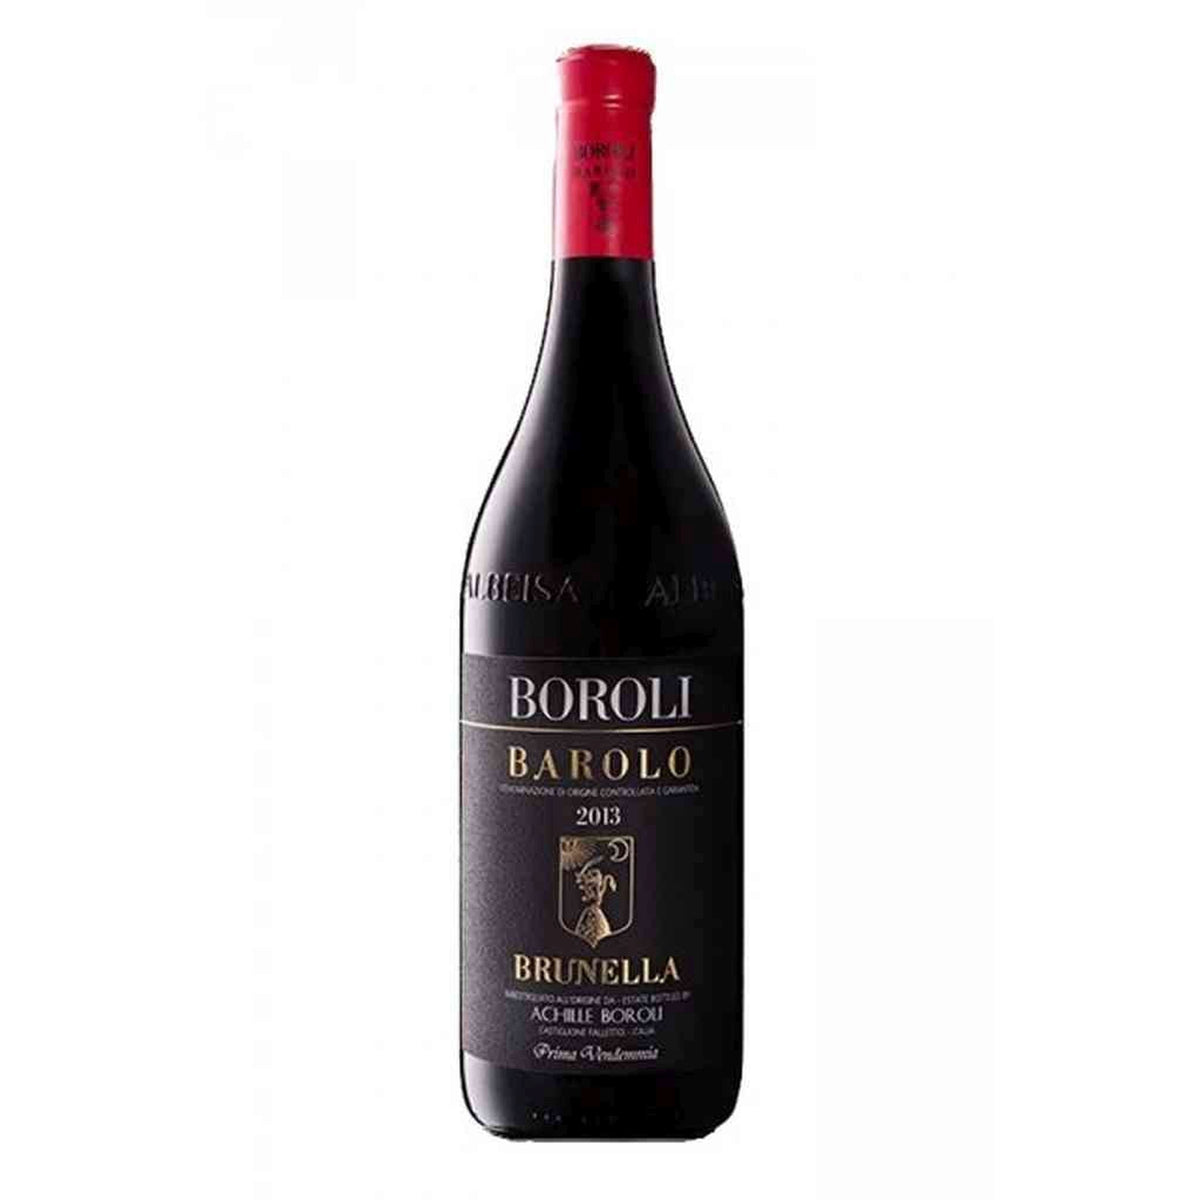 Boroli-Rotwein-Nebbiolo-2013 Barolo Cru Brunella Magnum-WINECOM